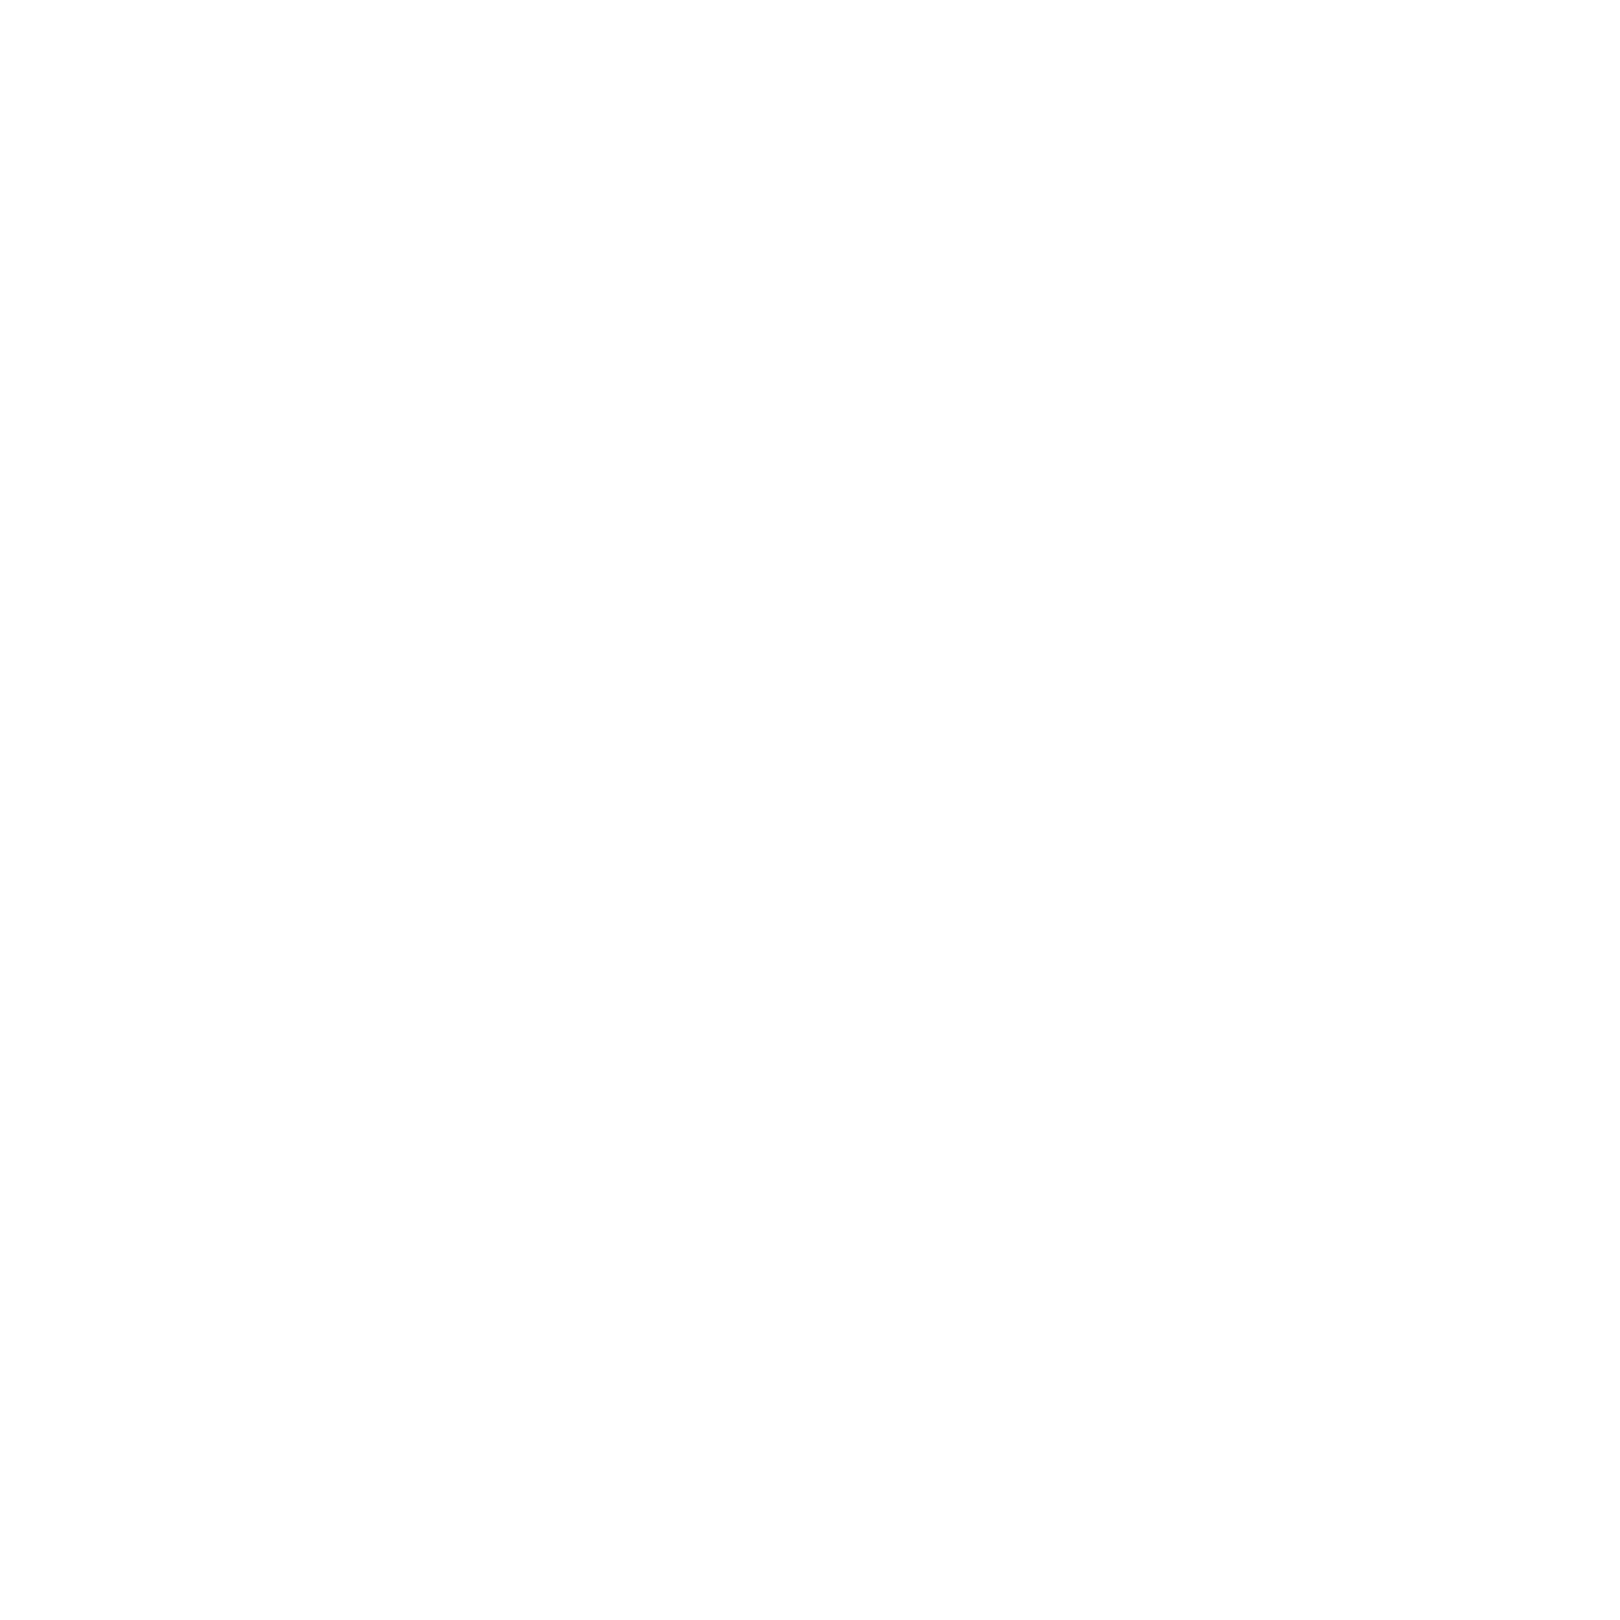 ACN.coop